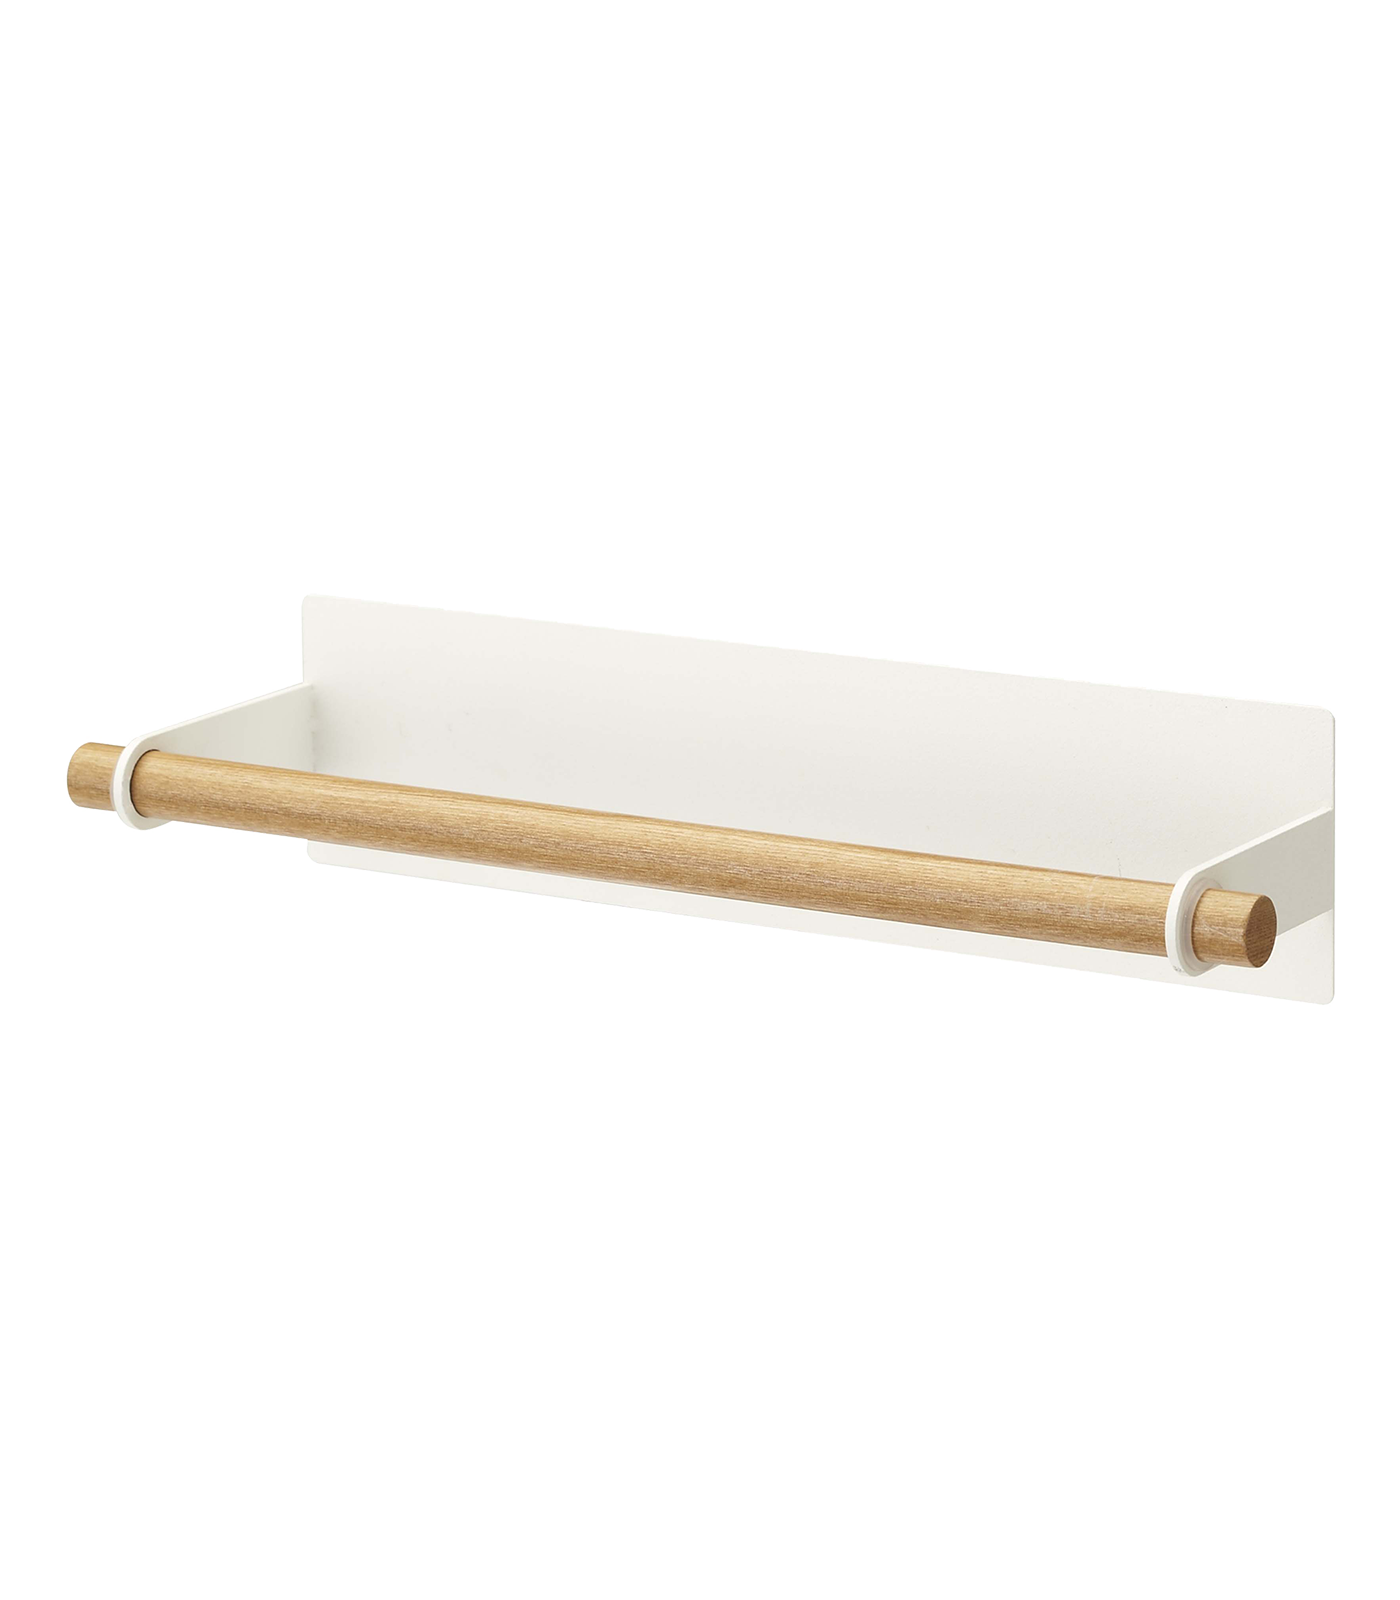 Magnetic Paper Towel Hanger - Steel + Wood - Small